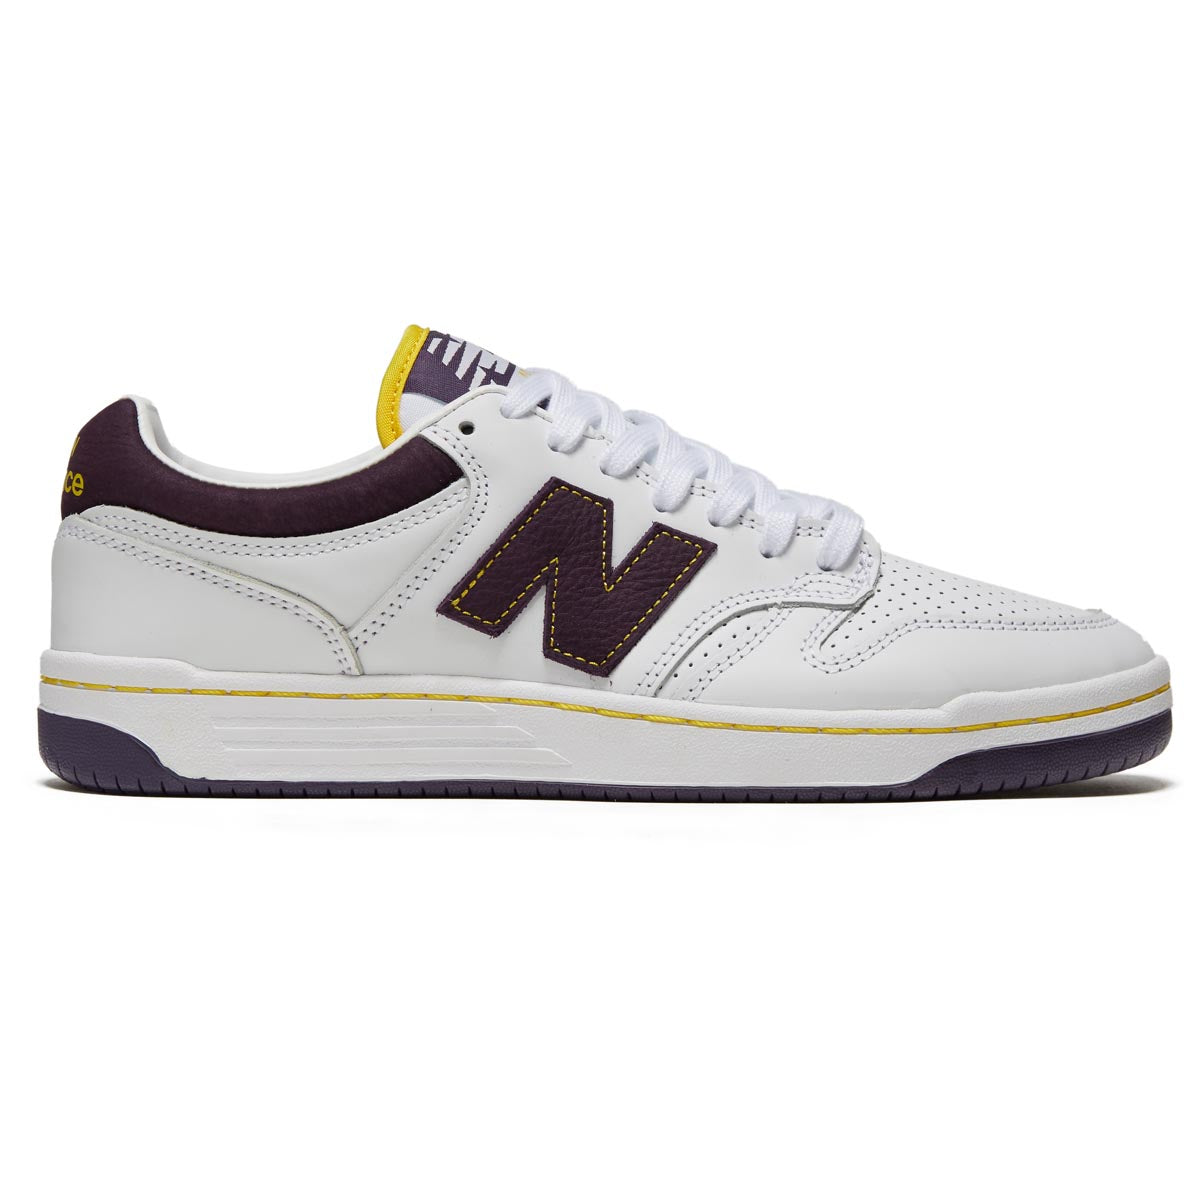 New Balance 480 Shoes - White/Purple/Gold image 1